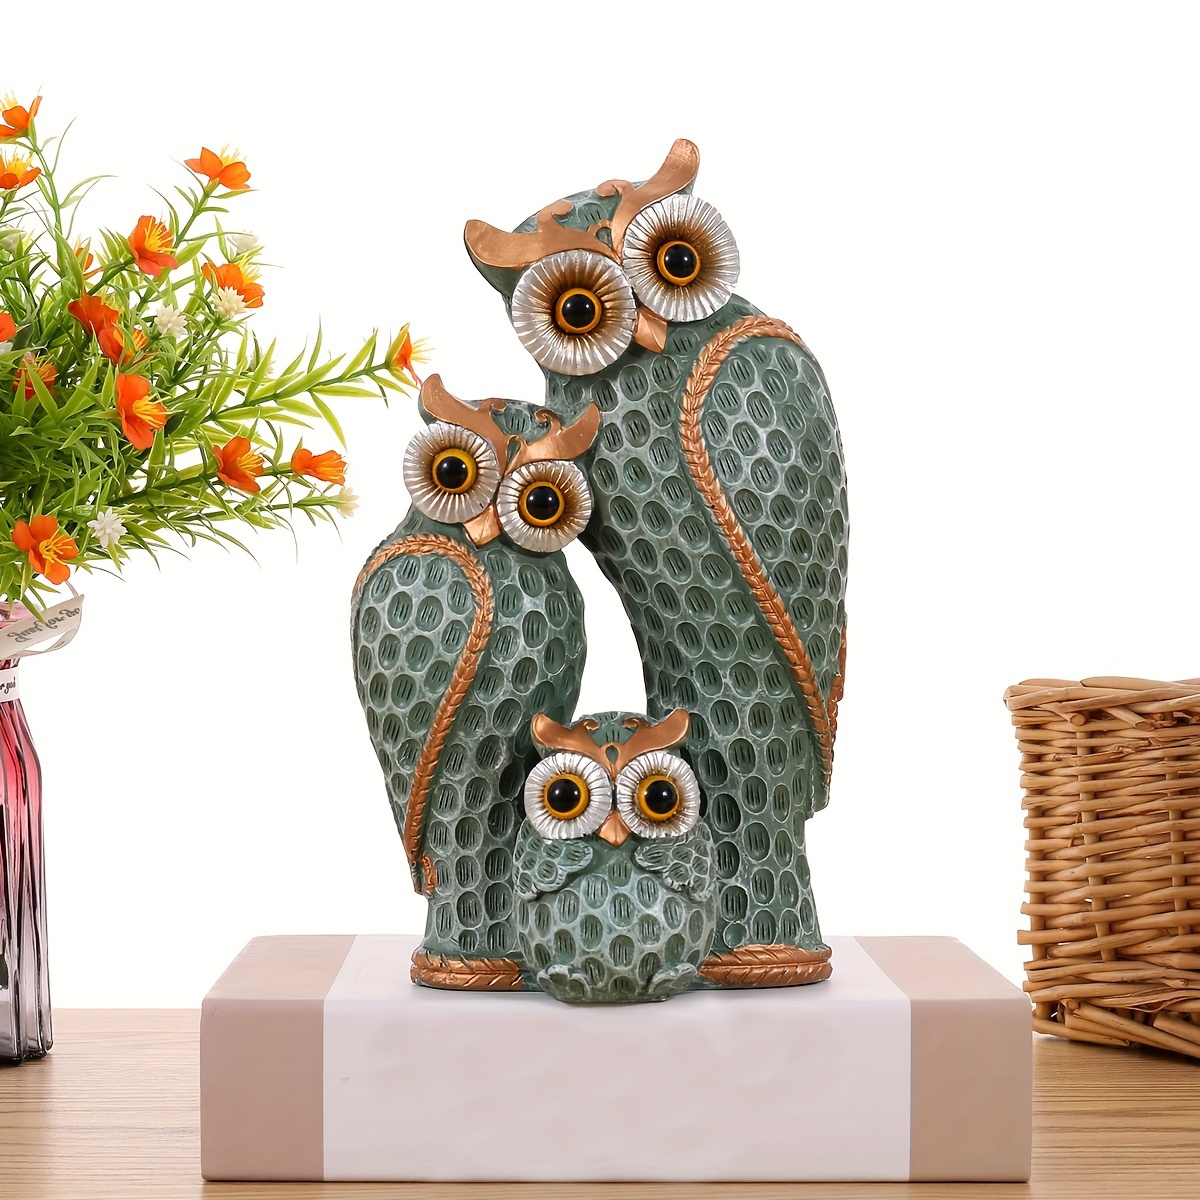 

Modern Minimalist Owl Family Decor - Resin Animal Figurine For Living Room, Entryway, Bookshelf & More - Versatile Indoor/outdoor Home Accent